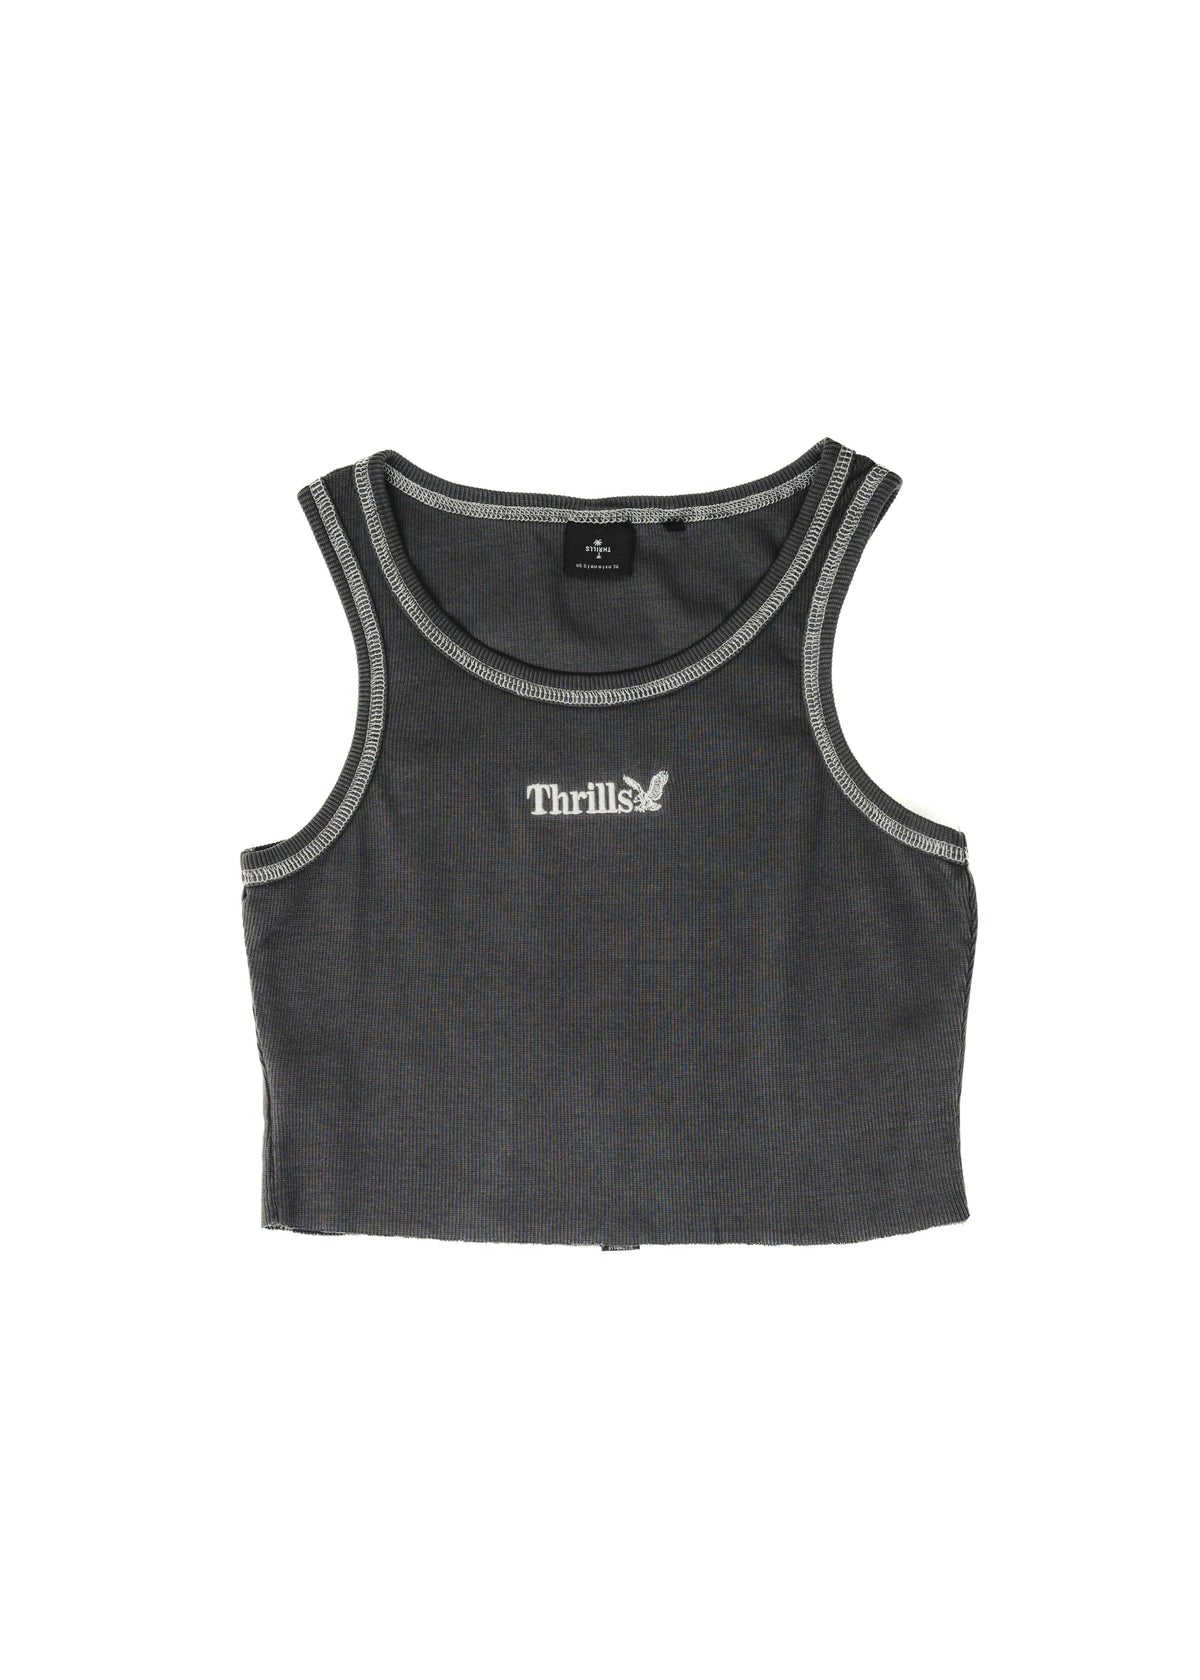 THRILLS - Workwear Cali Tank - Dark Charcoal - Hardpressed Print Studio Inc.